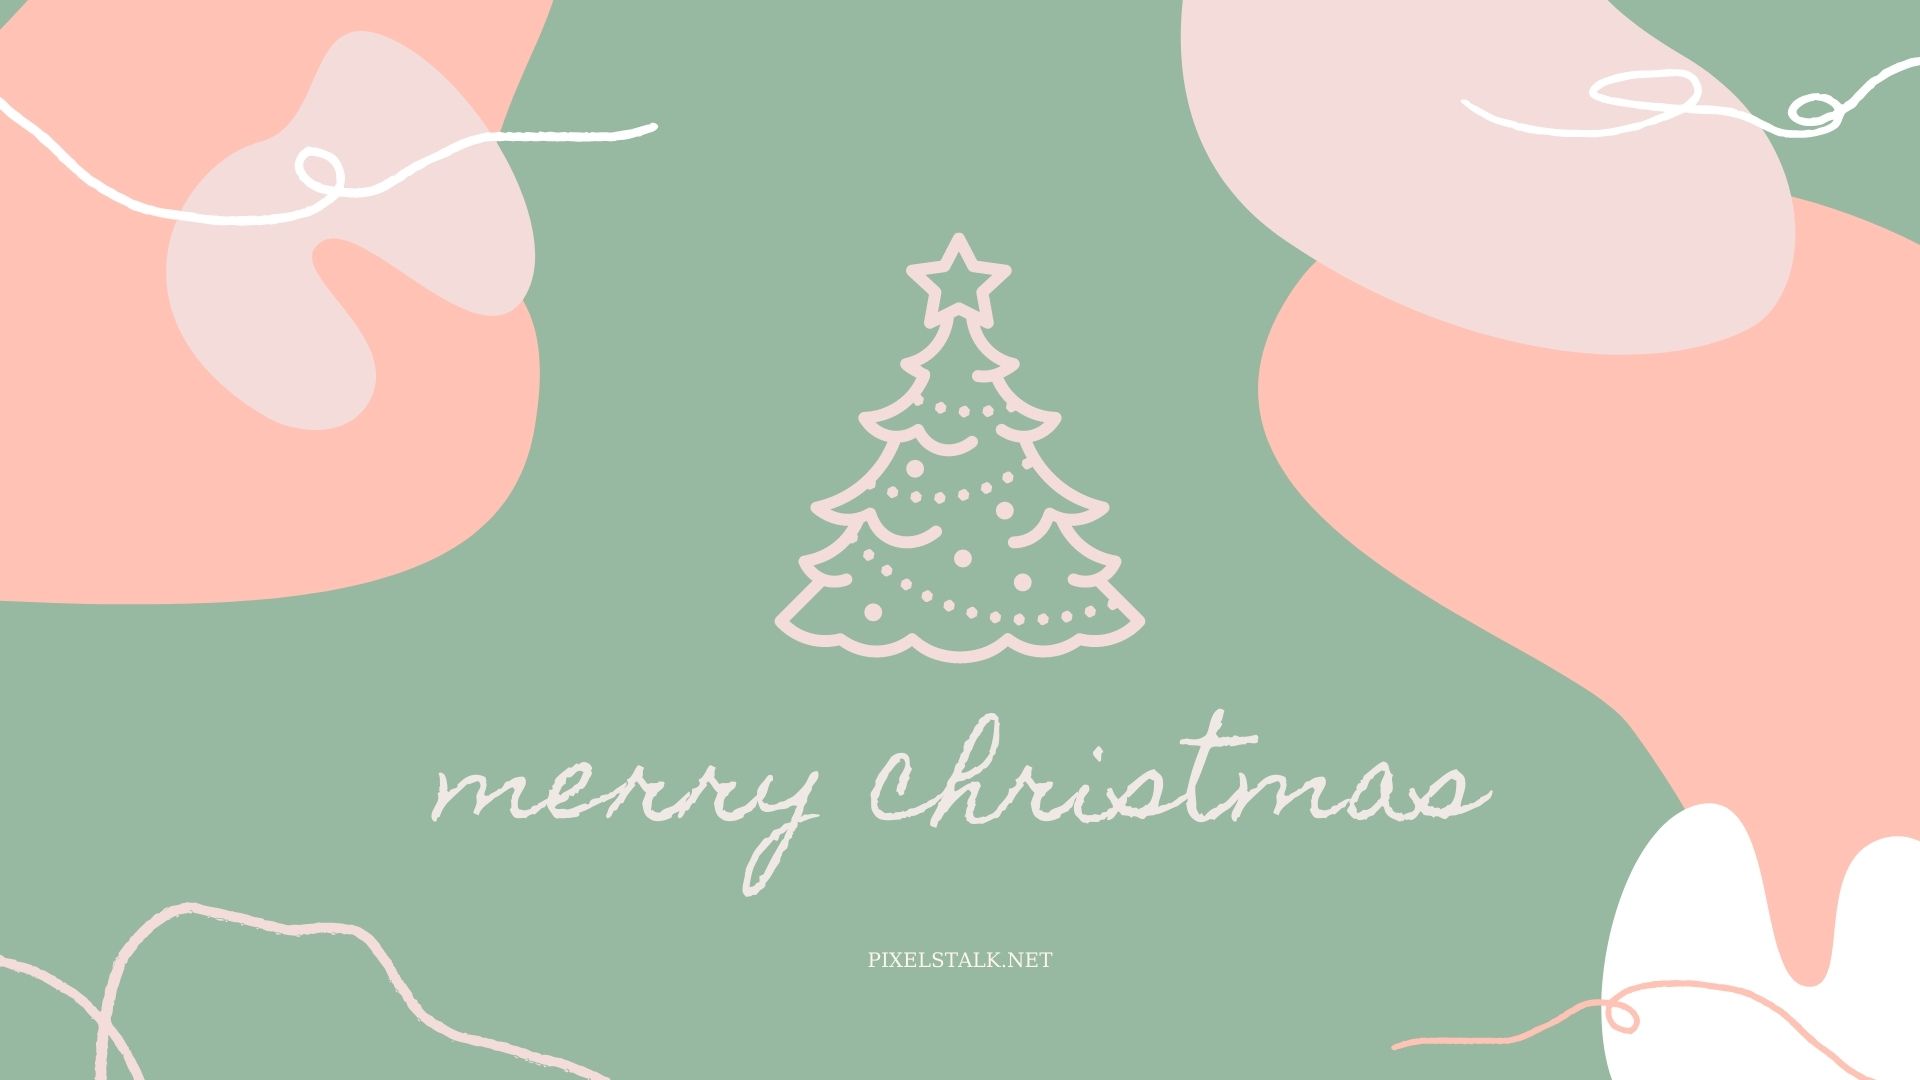 Free Aesthetic Christmas Background  Download in Illustrator EPS SVG  JPG PNG  Templatenet